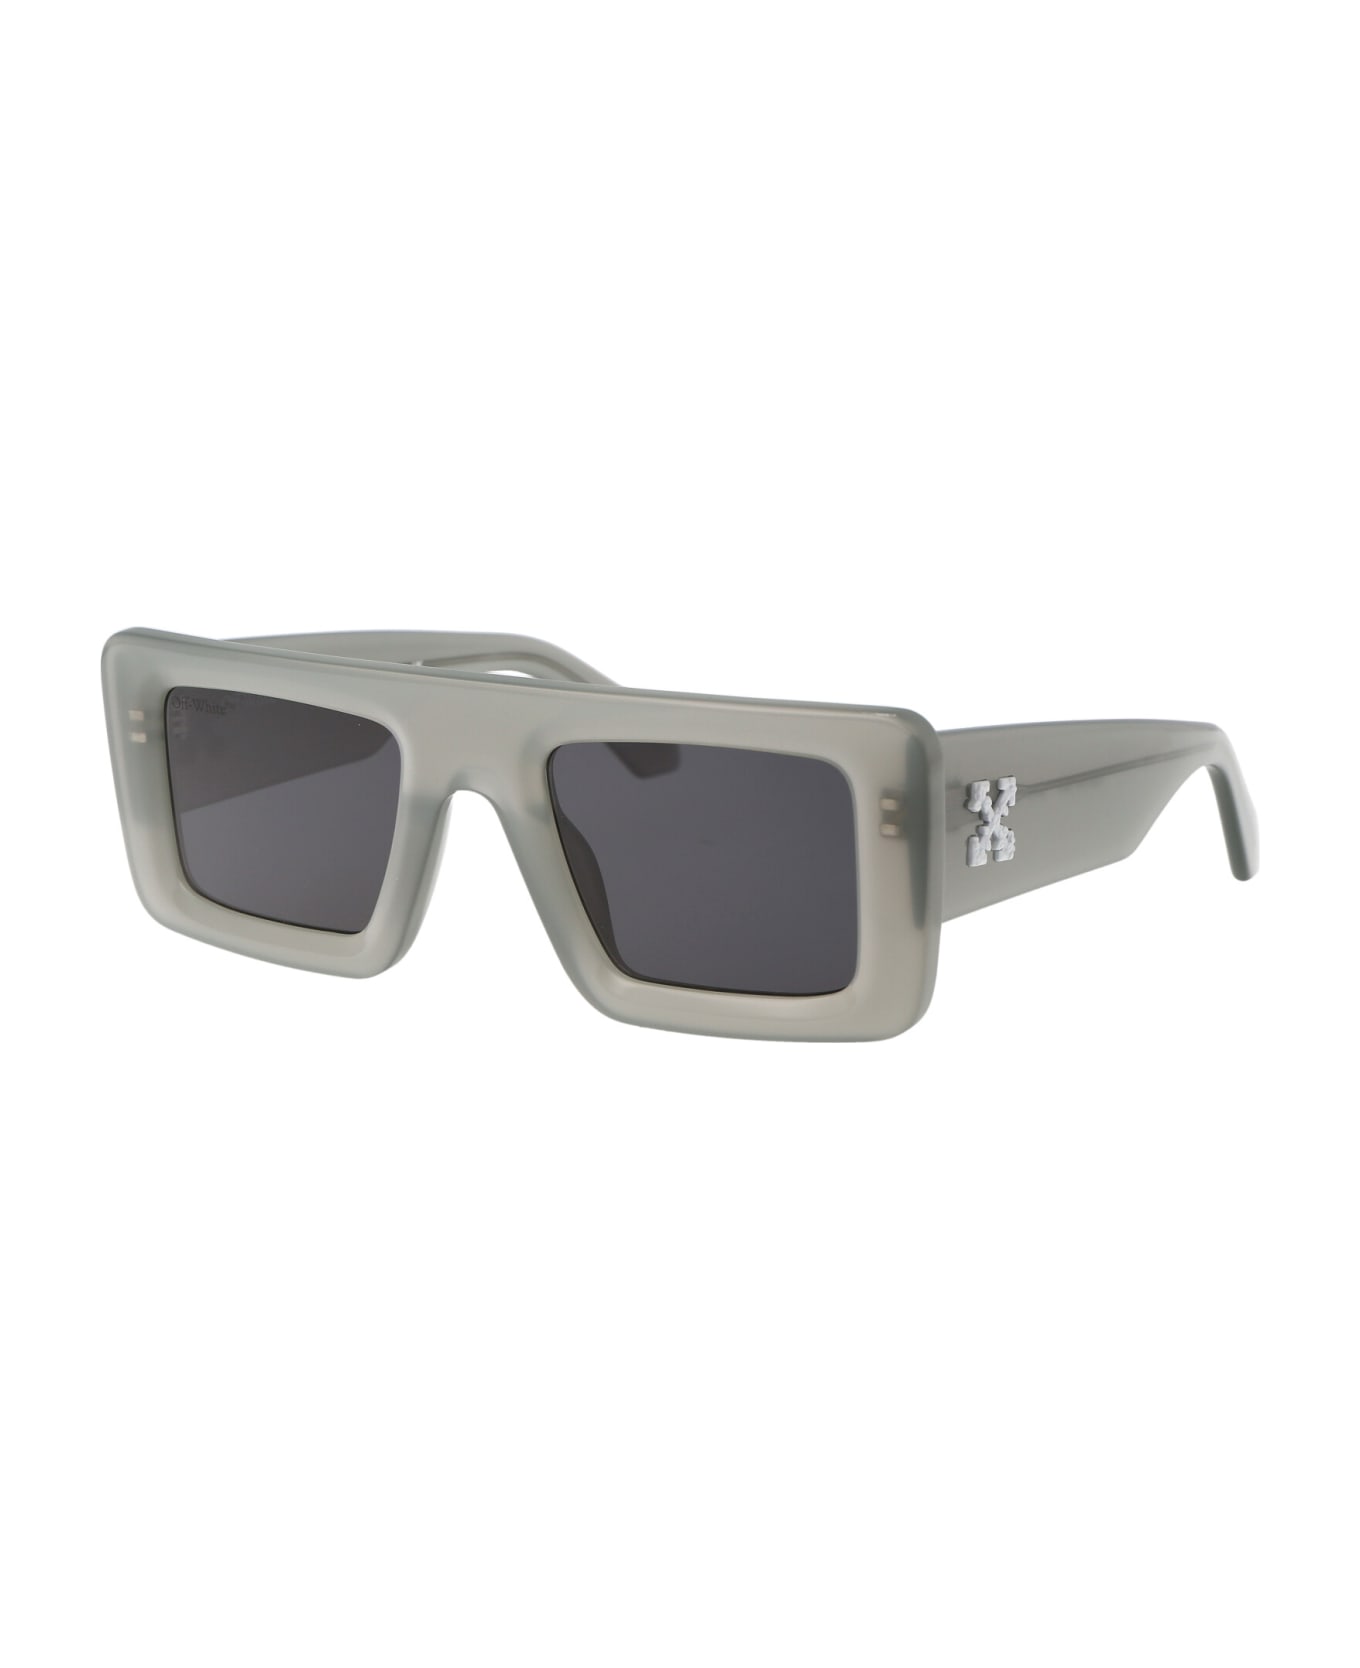 Off-White Square Frame Sunglasses - 0907 GREY